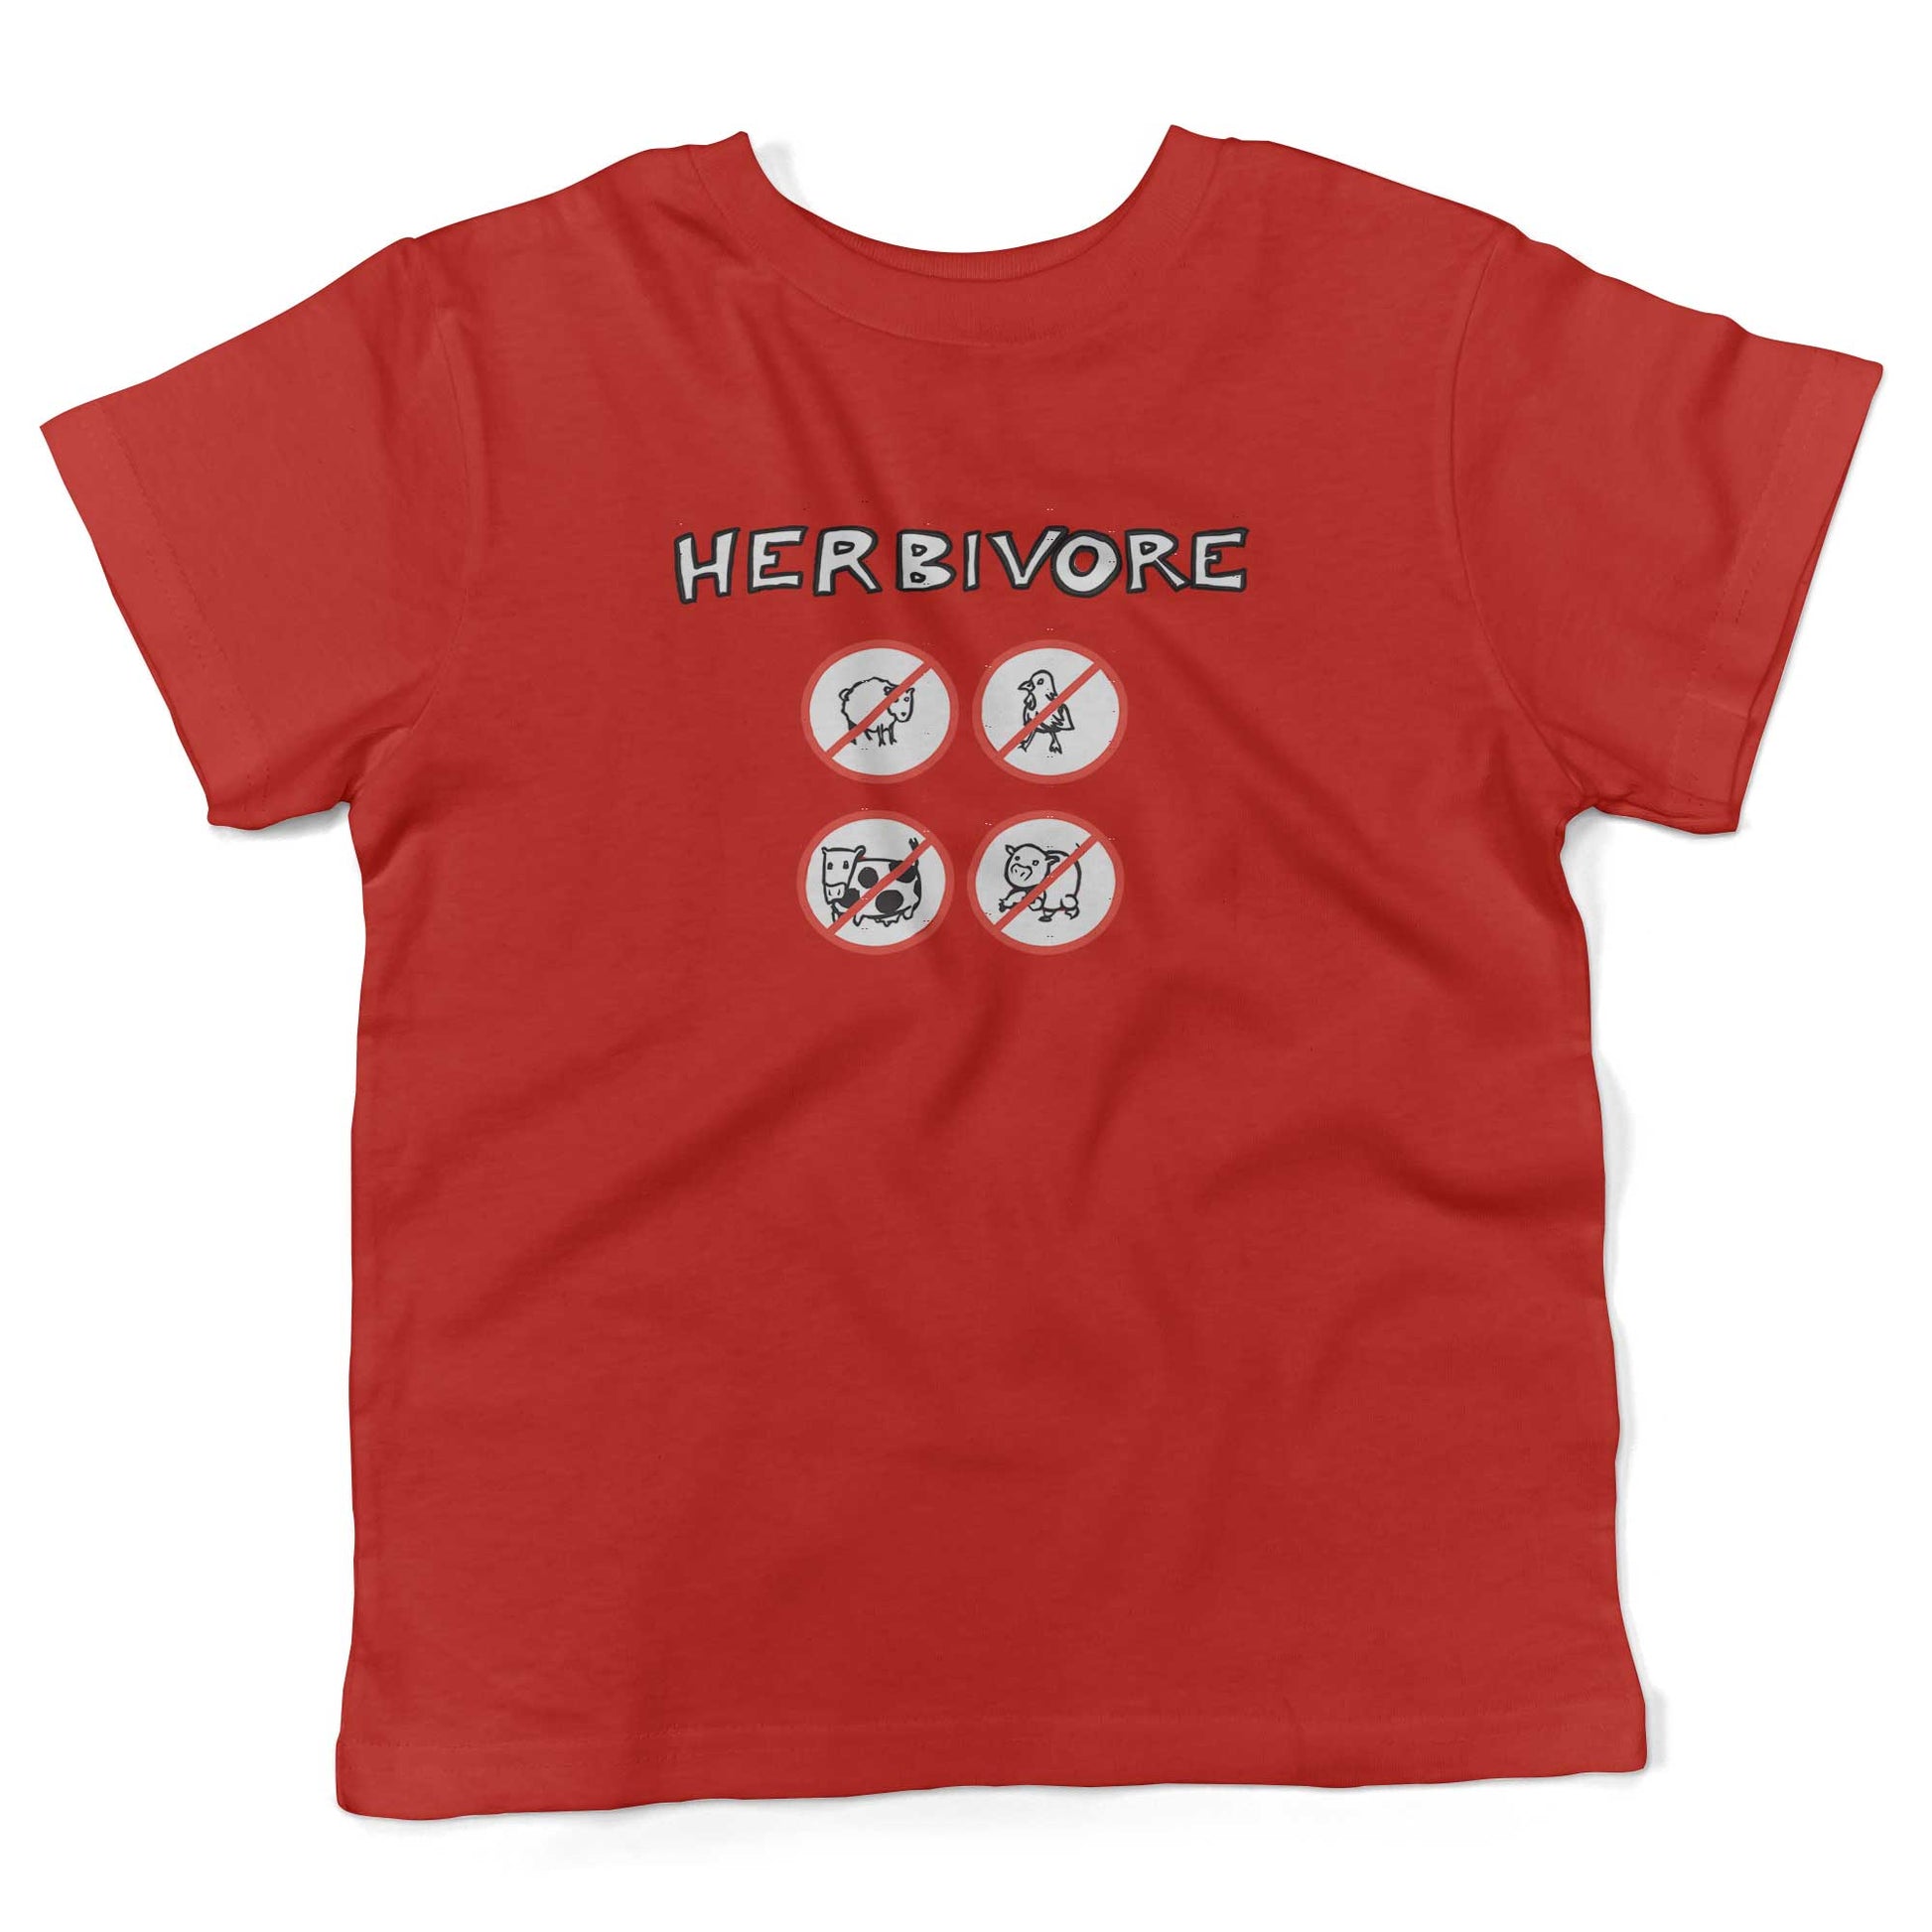 Herbivore Toddler Shirt-Red-2T